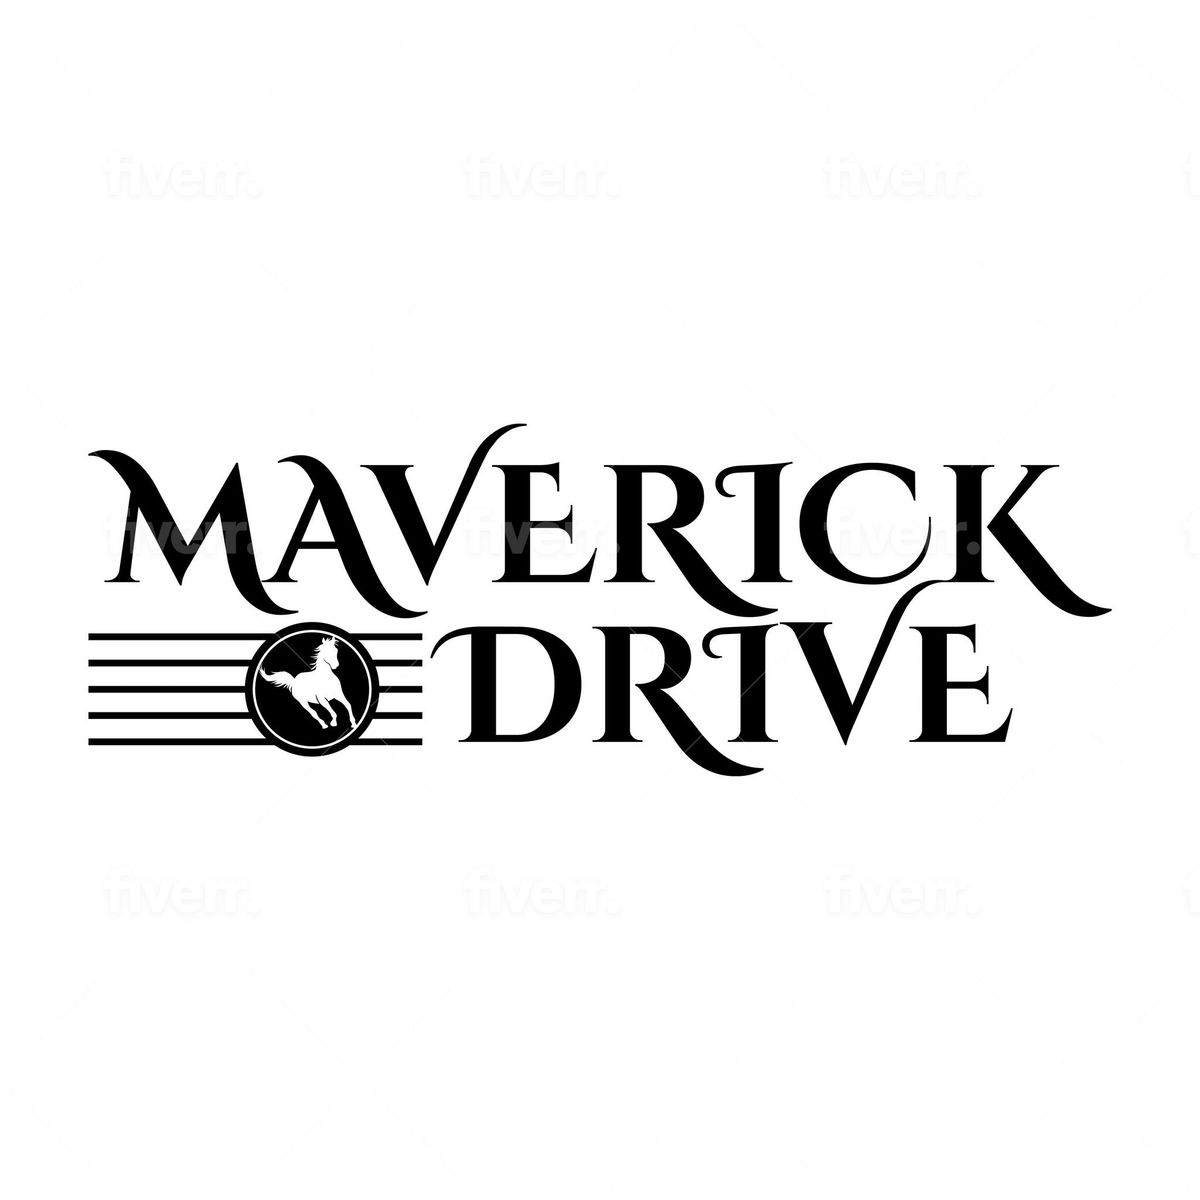 Maverick Drive Premiere at Kalahari Resorts